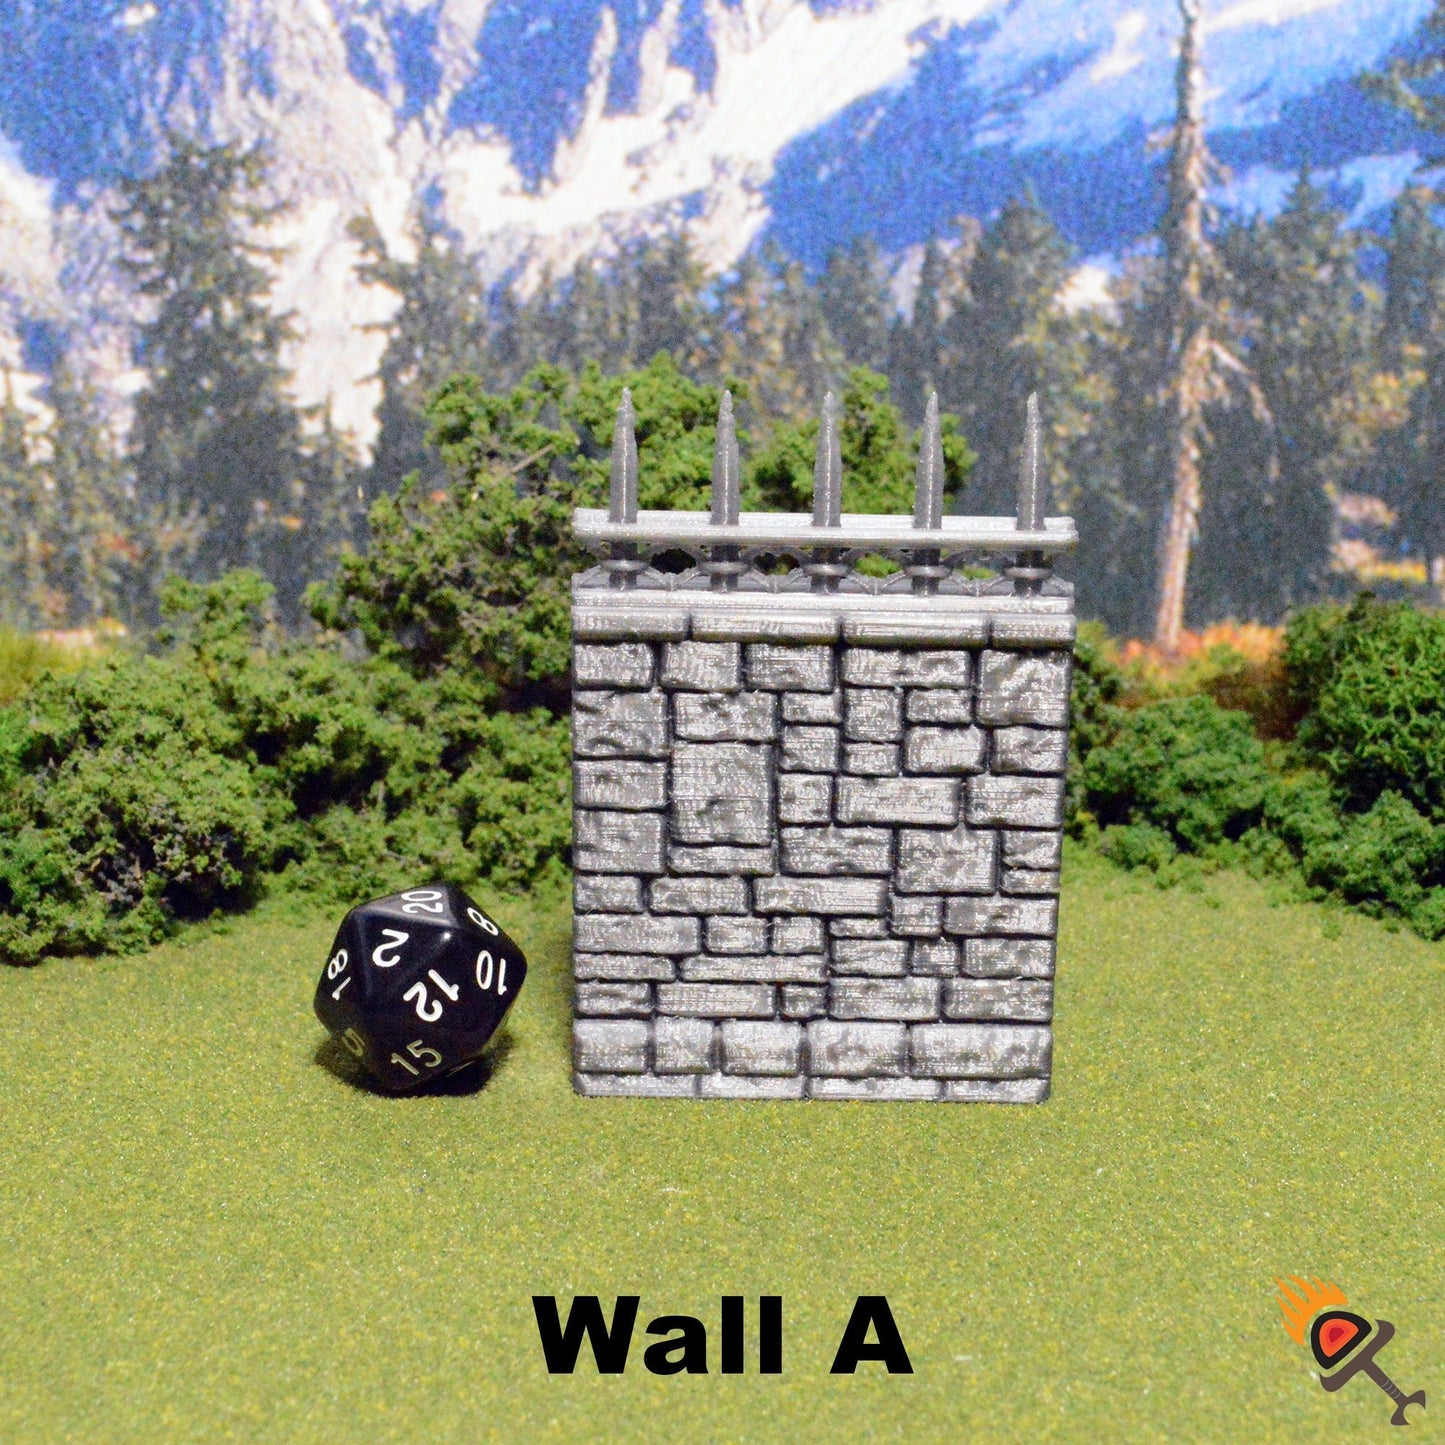 Arcanist's Stone Wall Tiles Straight 28mm for D&D Terrain, Modular OpenLOCK Building Tiles, DnD Medieval Village Stone Wall Tiles